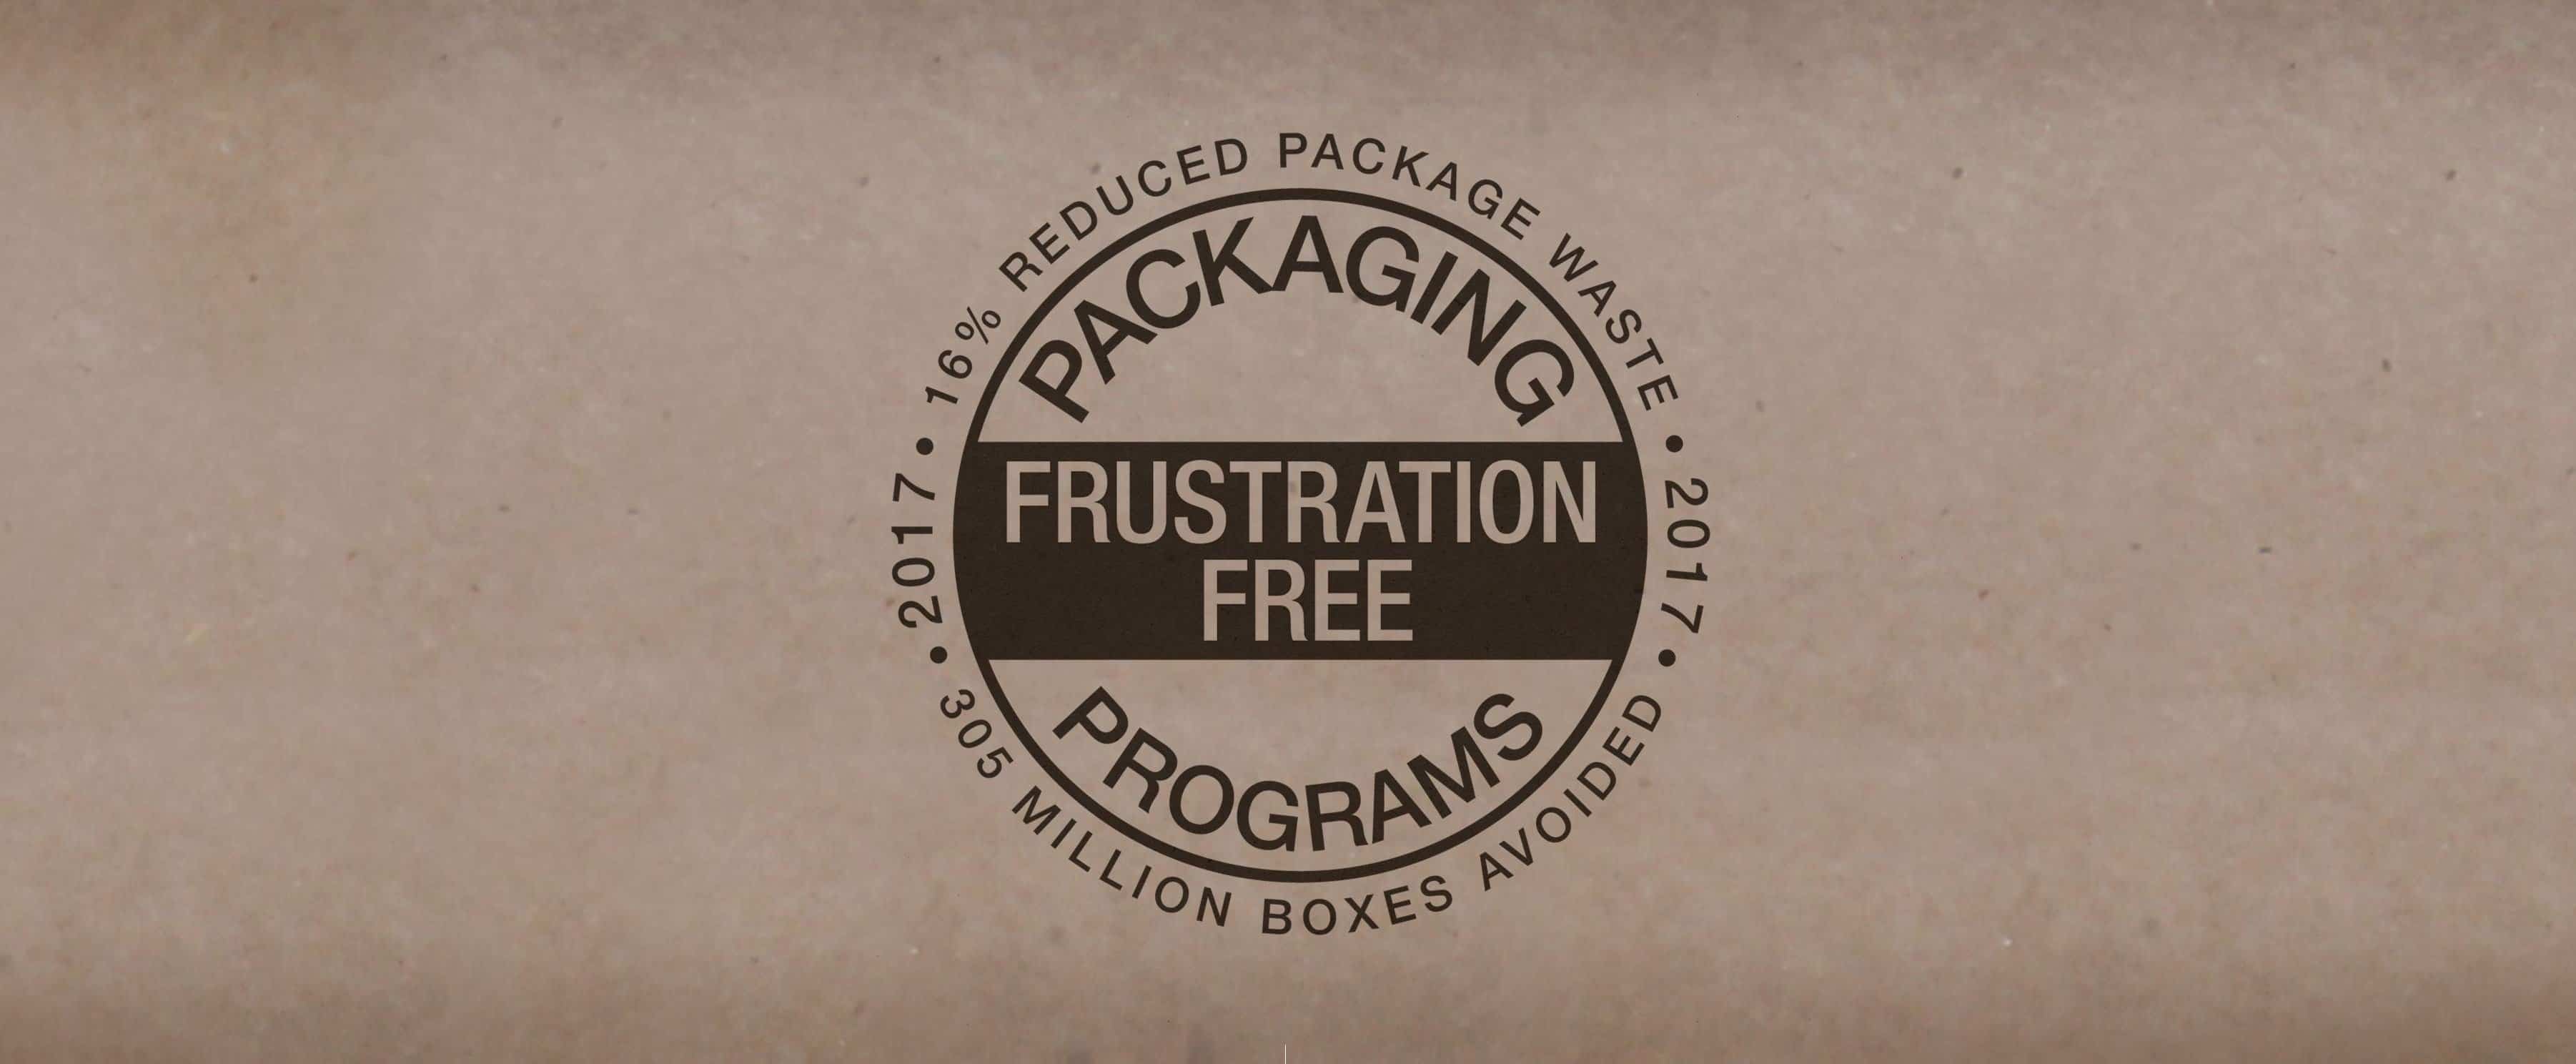 frustration free packaging logo